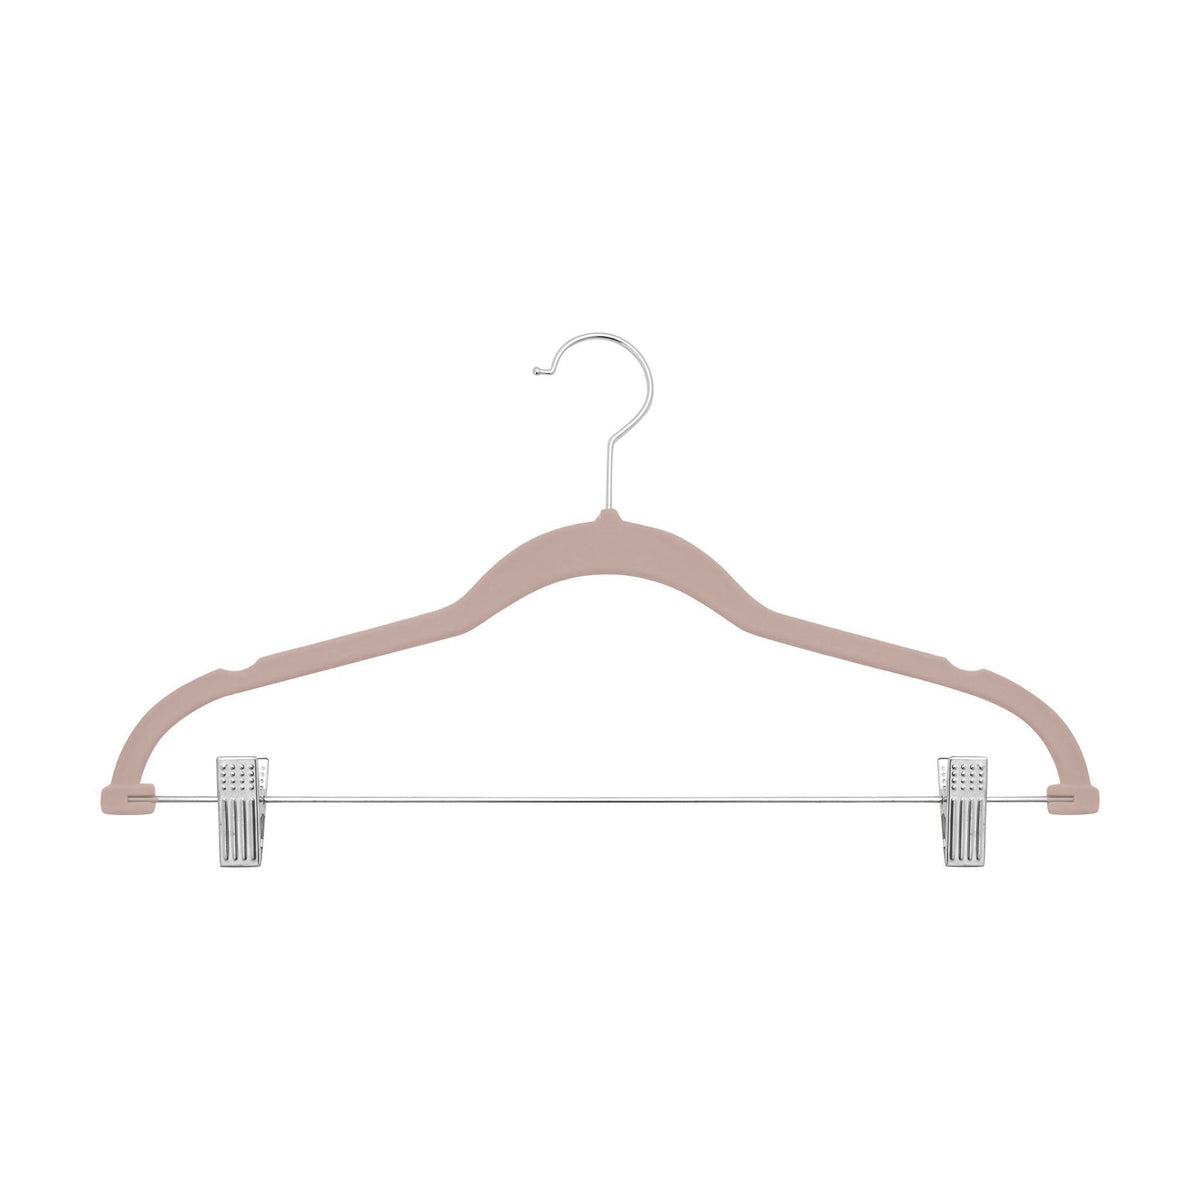 Bon Maxie Coat Hangers No-Slip Flocked Pant/Skirt Hangers - Box 10 (Gold/Silver)